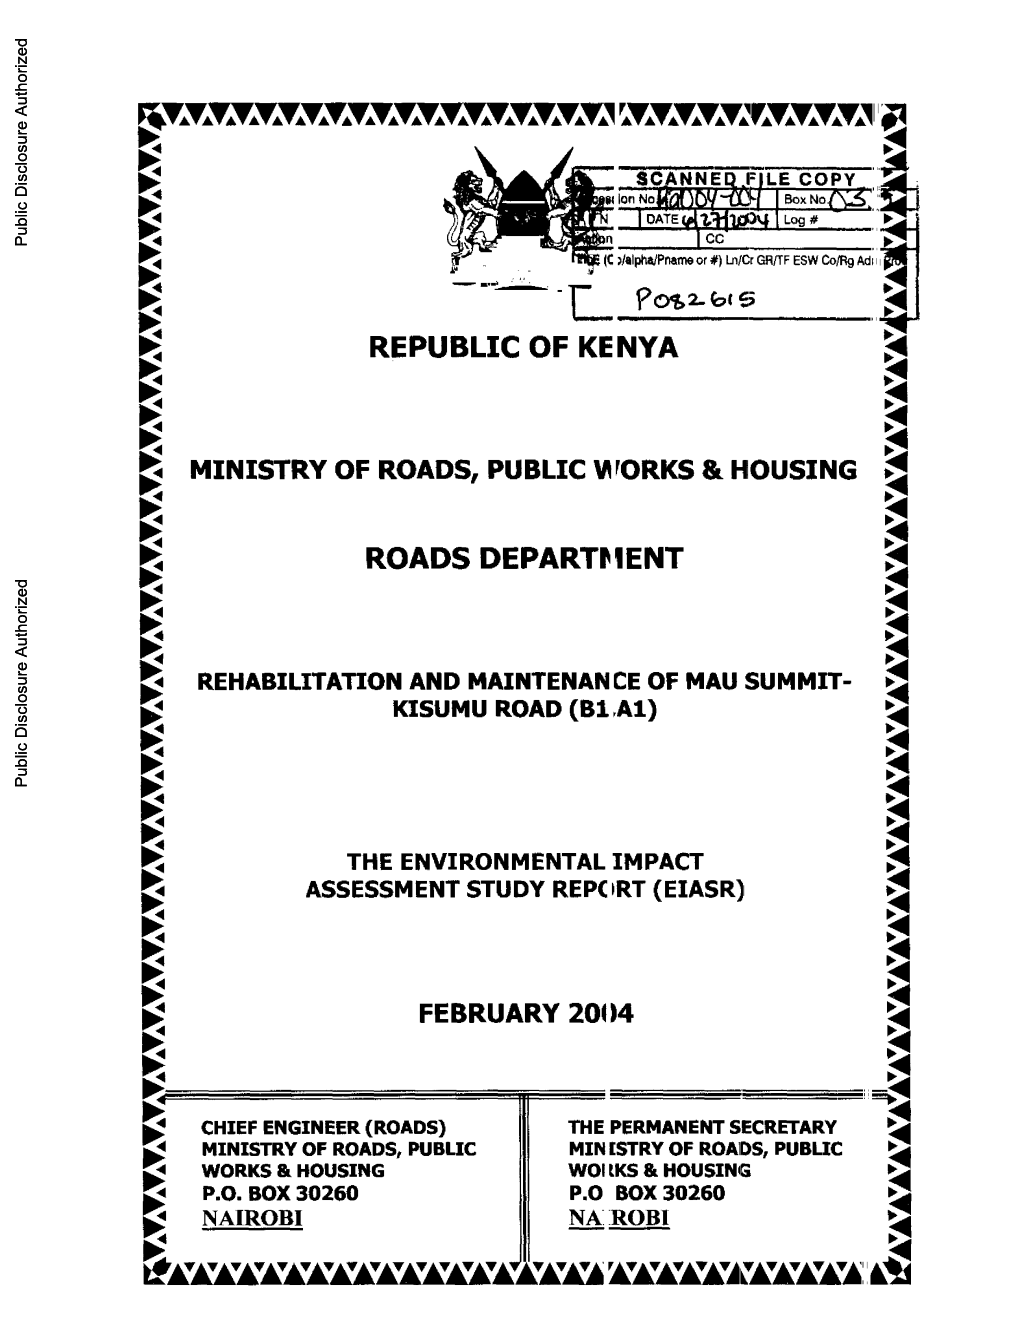 Republic of Kenya $